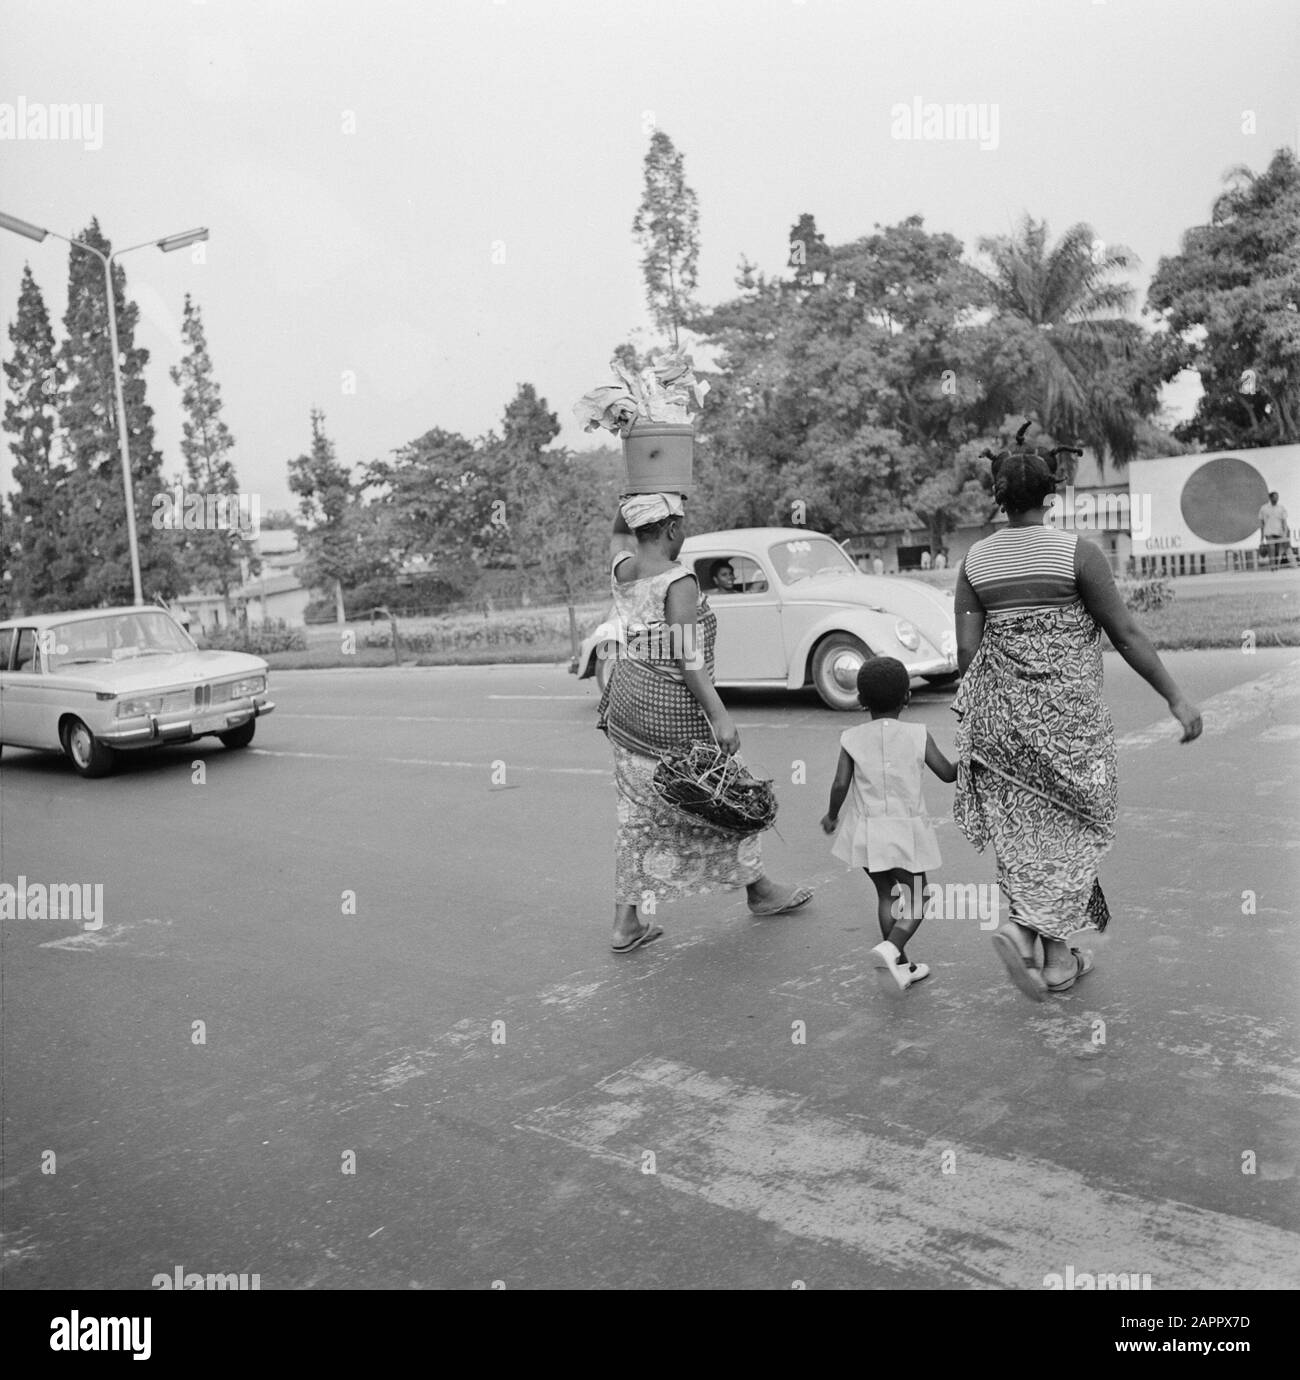 Zaire (ehemals Belgischer Kongo) Streetscape in Kinshasa Datum: 24. Oktober 1973 Ort: Kongo, Kinshasa, Zaire Schlüsselwörter: Autos, Stadtansichten, Frauen Stockfoto